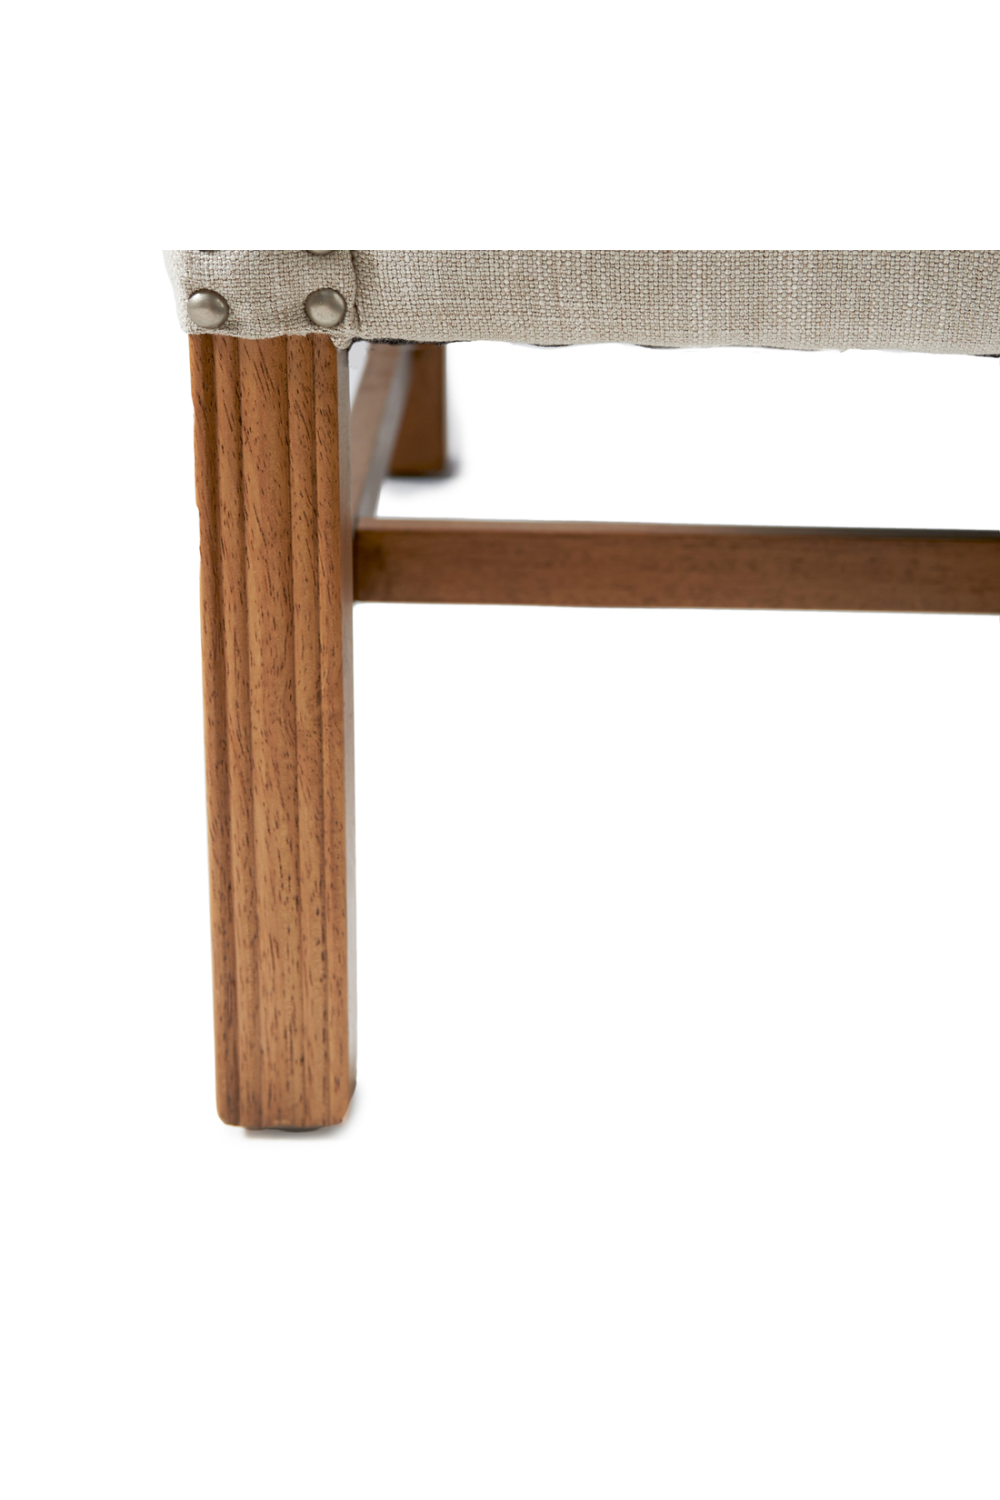 Modern Classic Wing Chair | Rivièra Maison Franklin Park | Woodfurniture.com